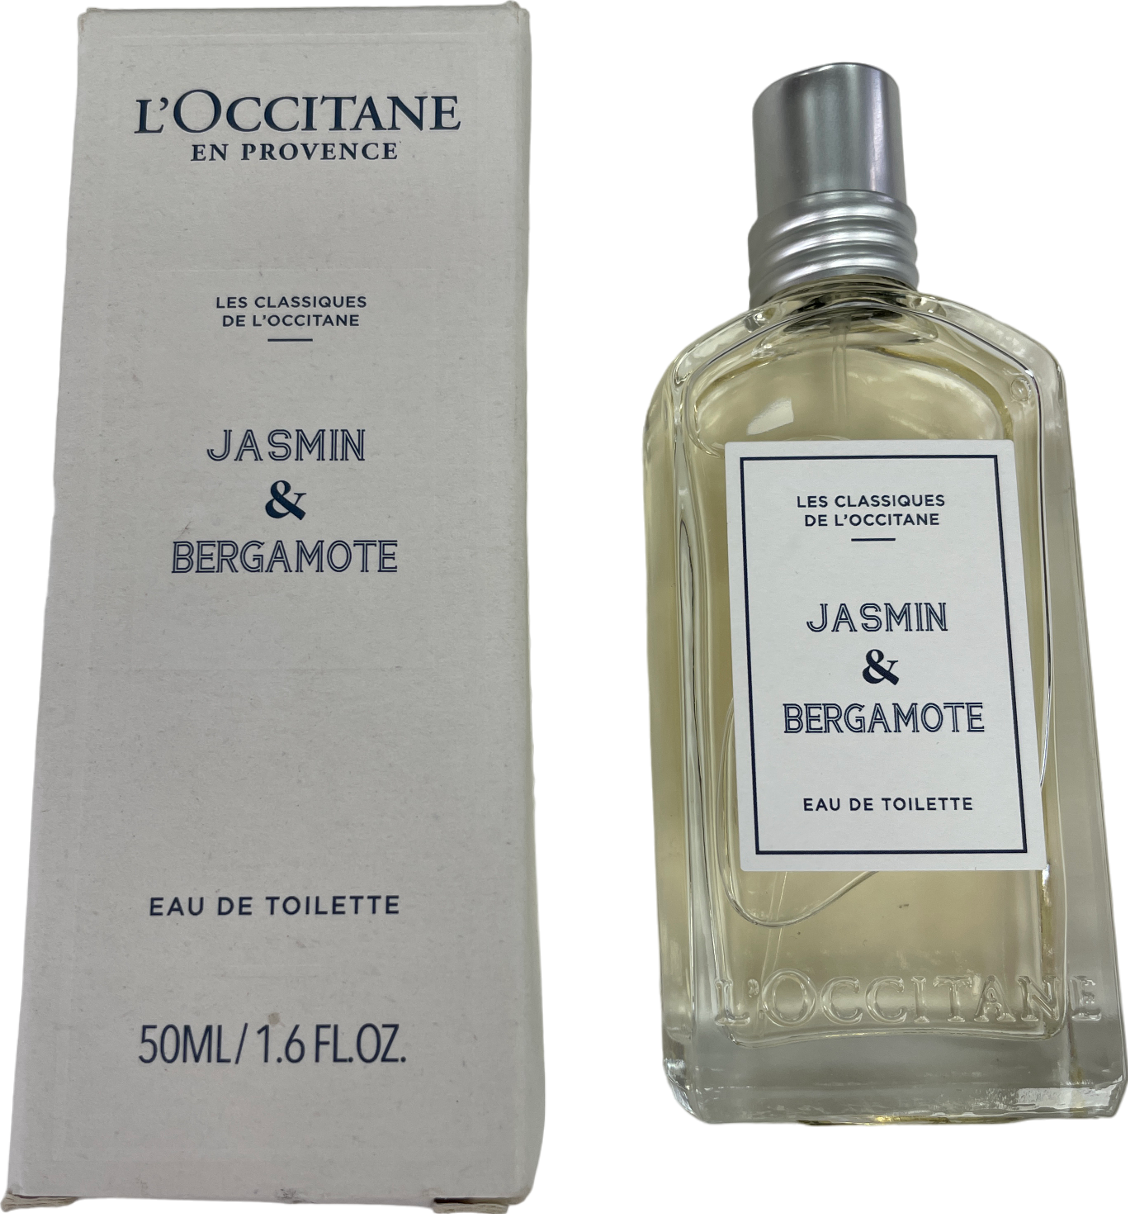 L'Occitane Jasmin & Bergamote Eau De Toilette 50ml